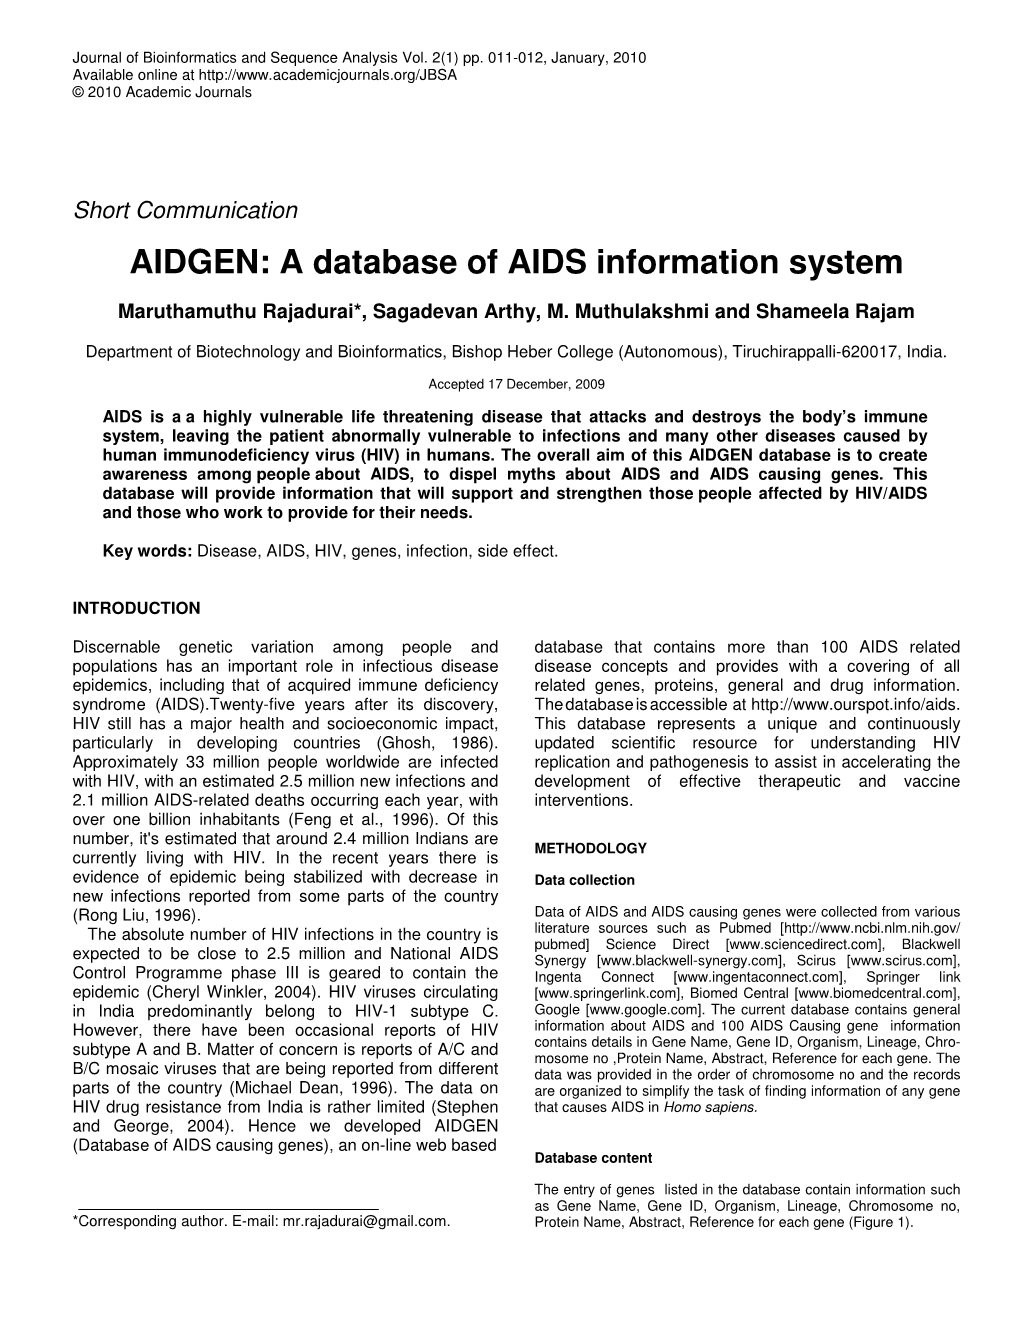 AIDGEN: a Database of AIDS Information System